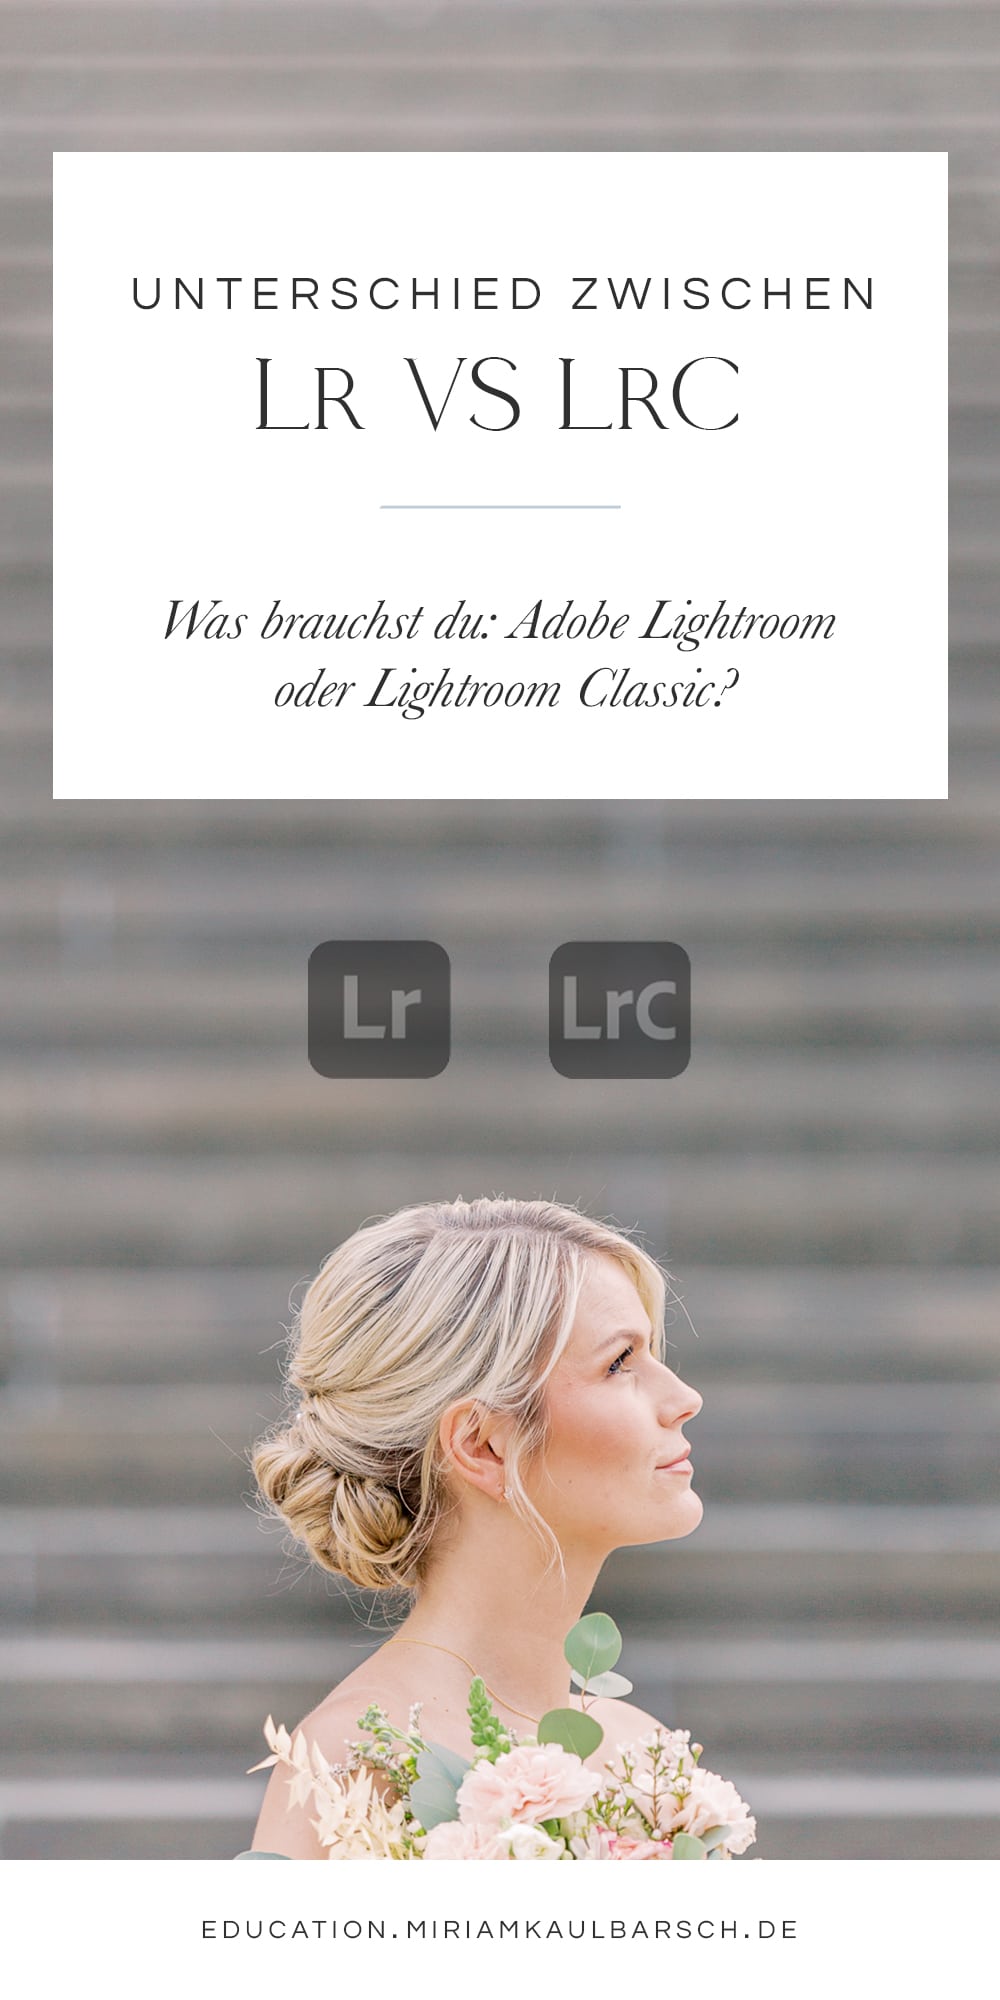 Was brauchst du: Adobe Lightroom oder Lightroom Classic?